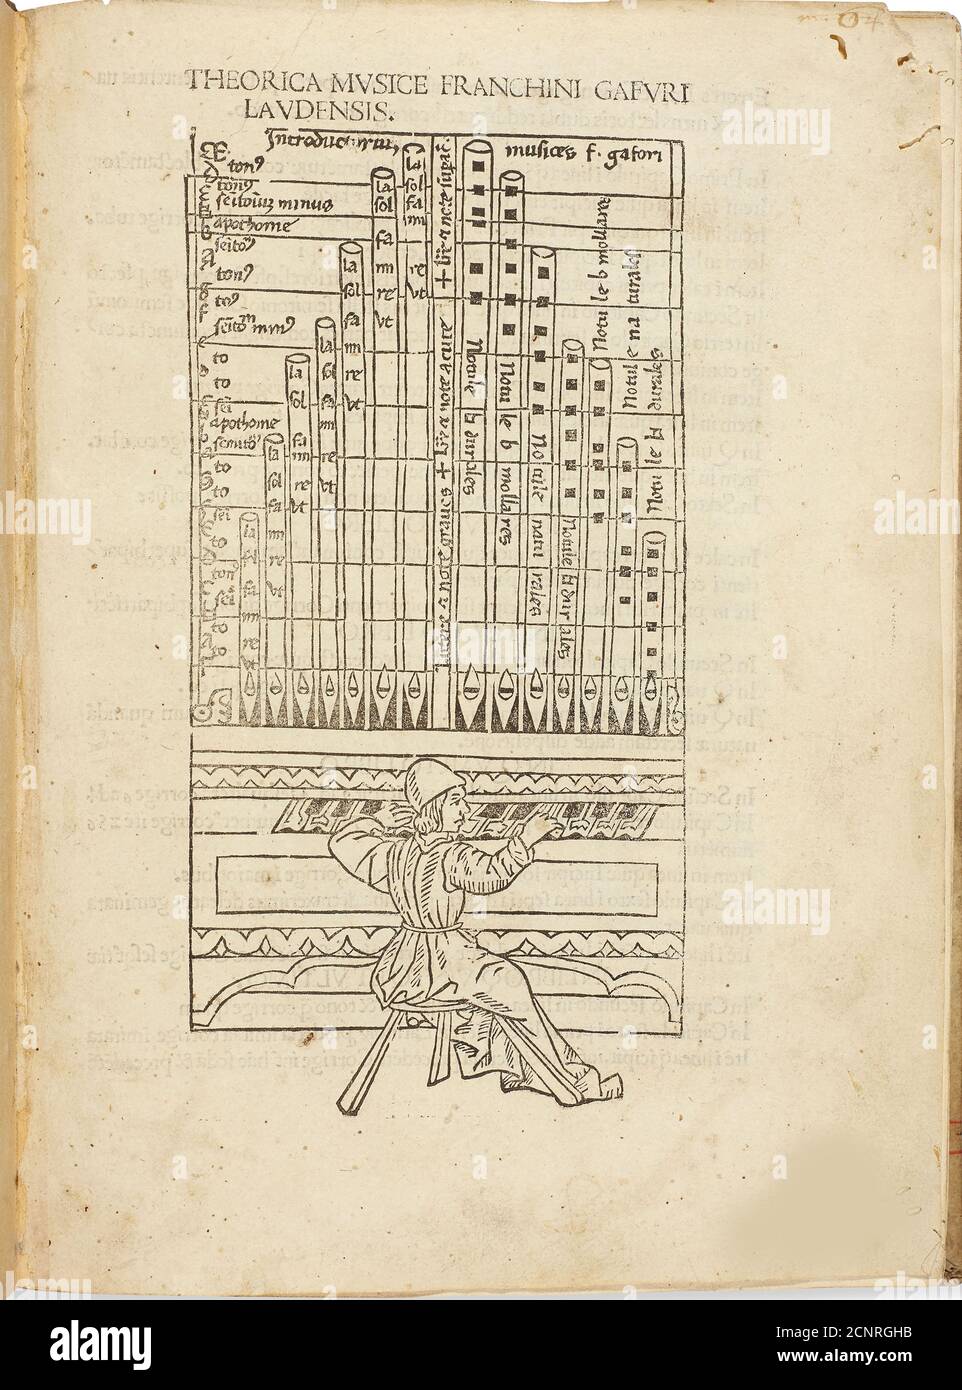 Theorica musice Franchini Gafuri laudensis, 1492. Private Collection. Stock Photo